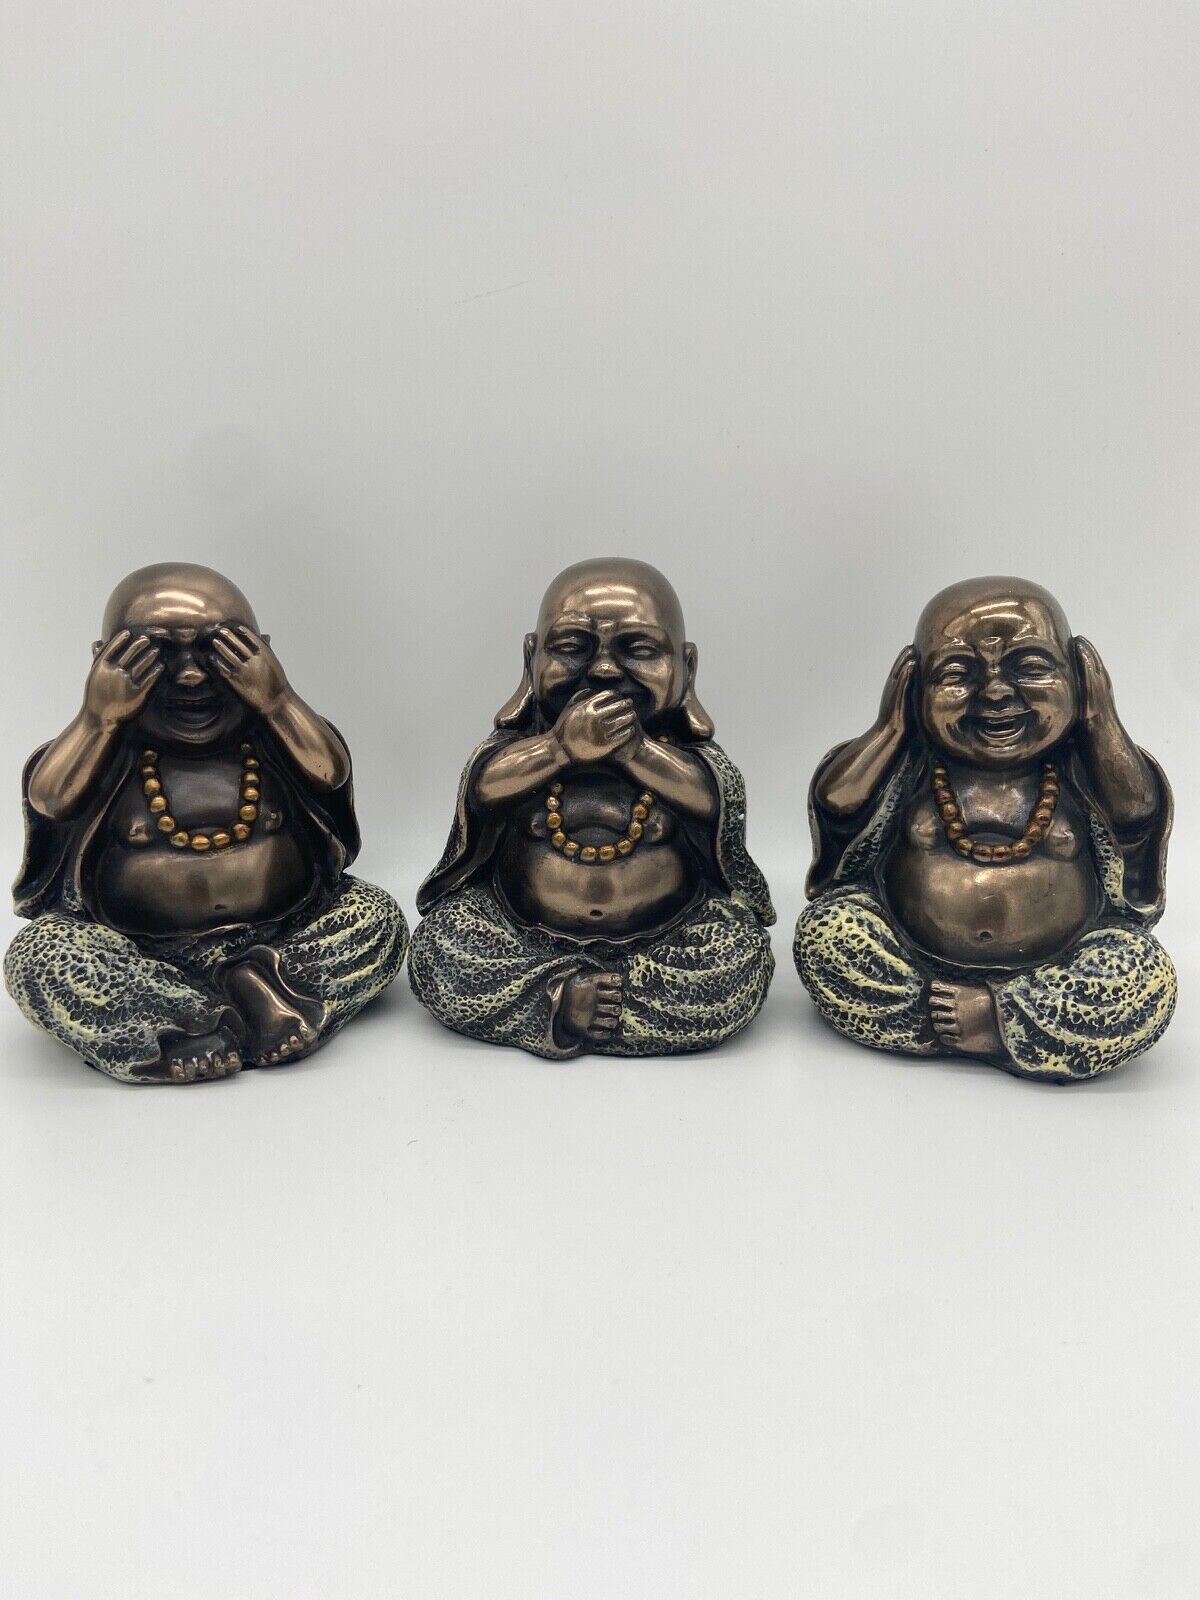 Three Small Wise Buddha Wealth Prosperity Longevity Statues Home Decor